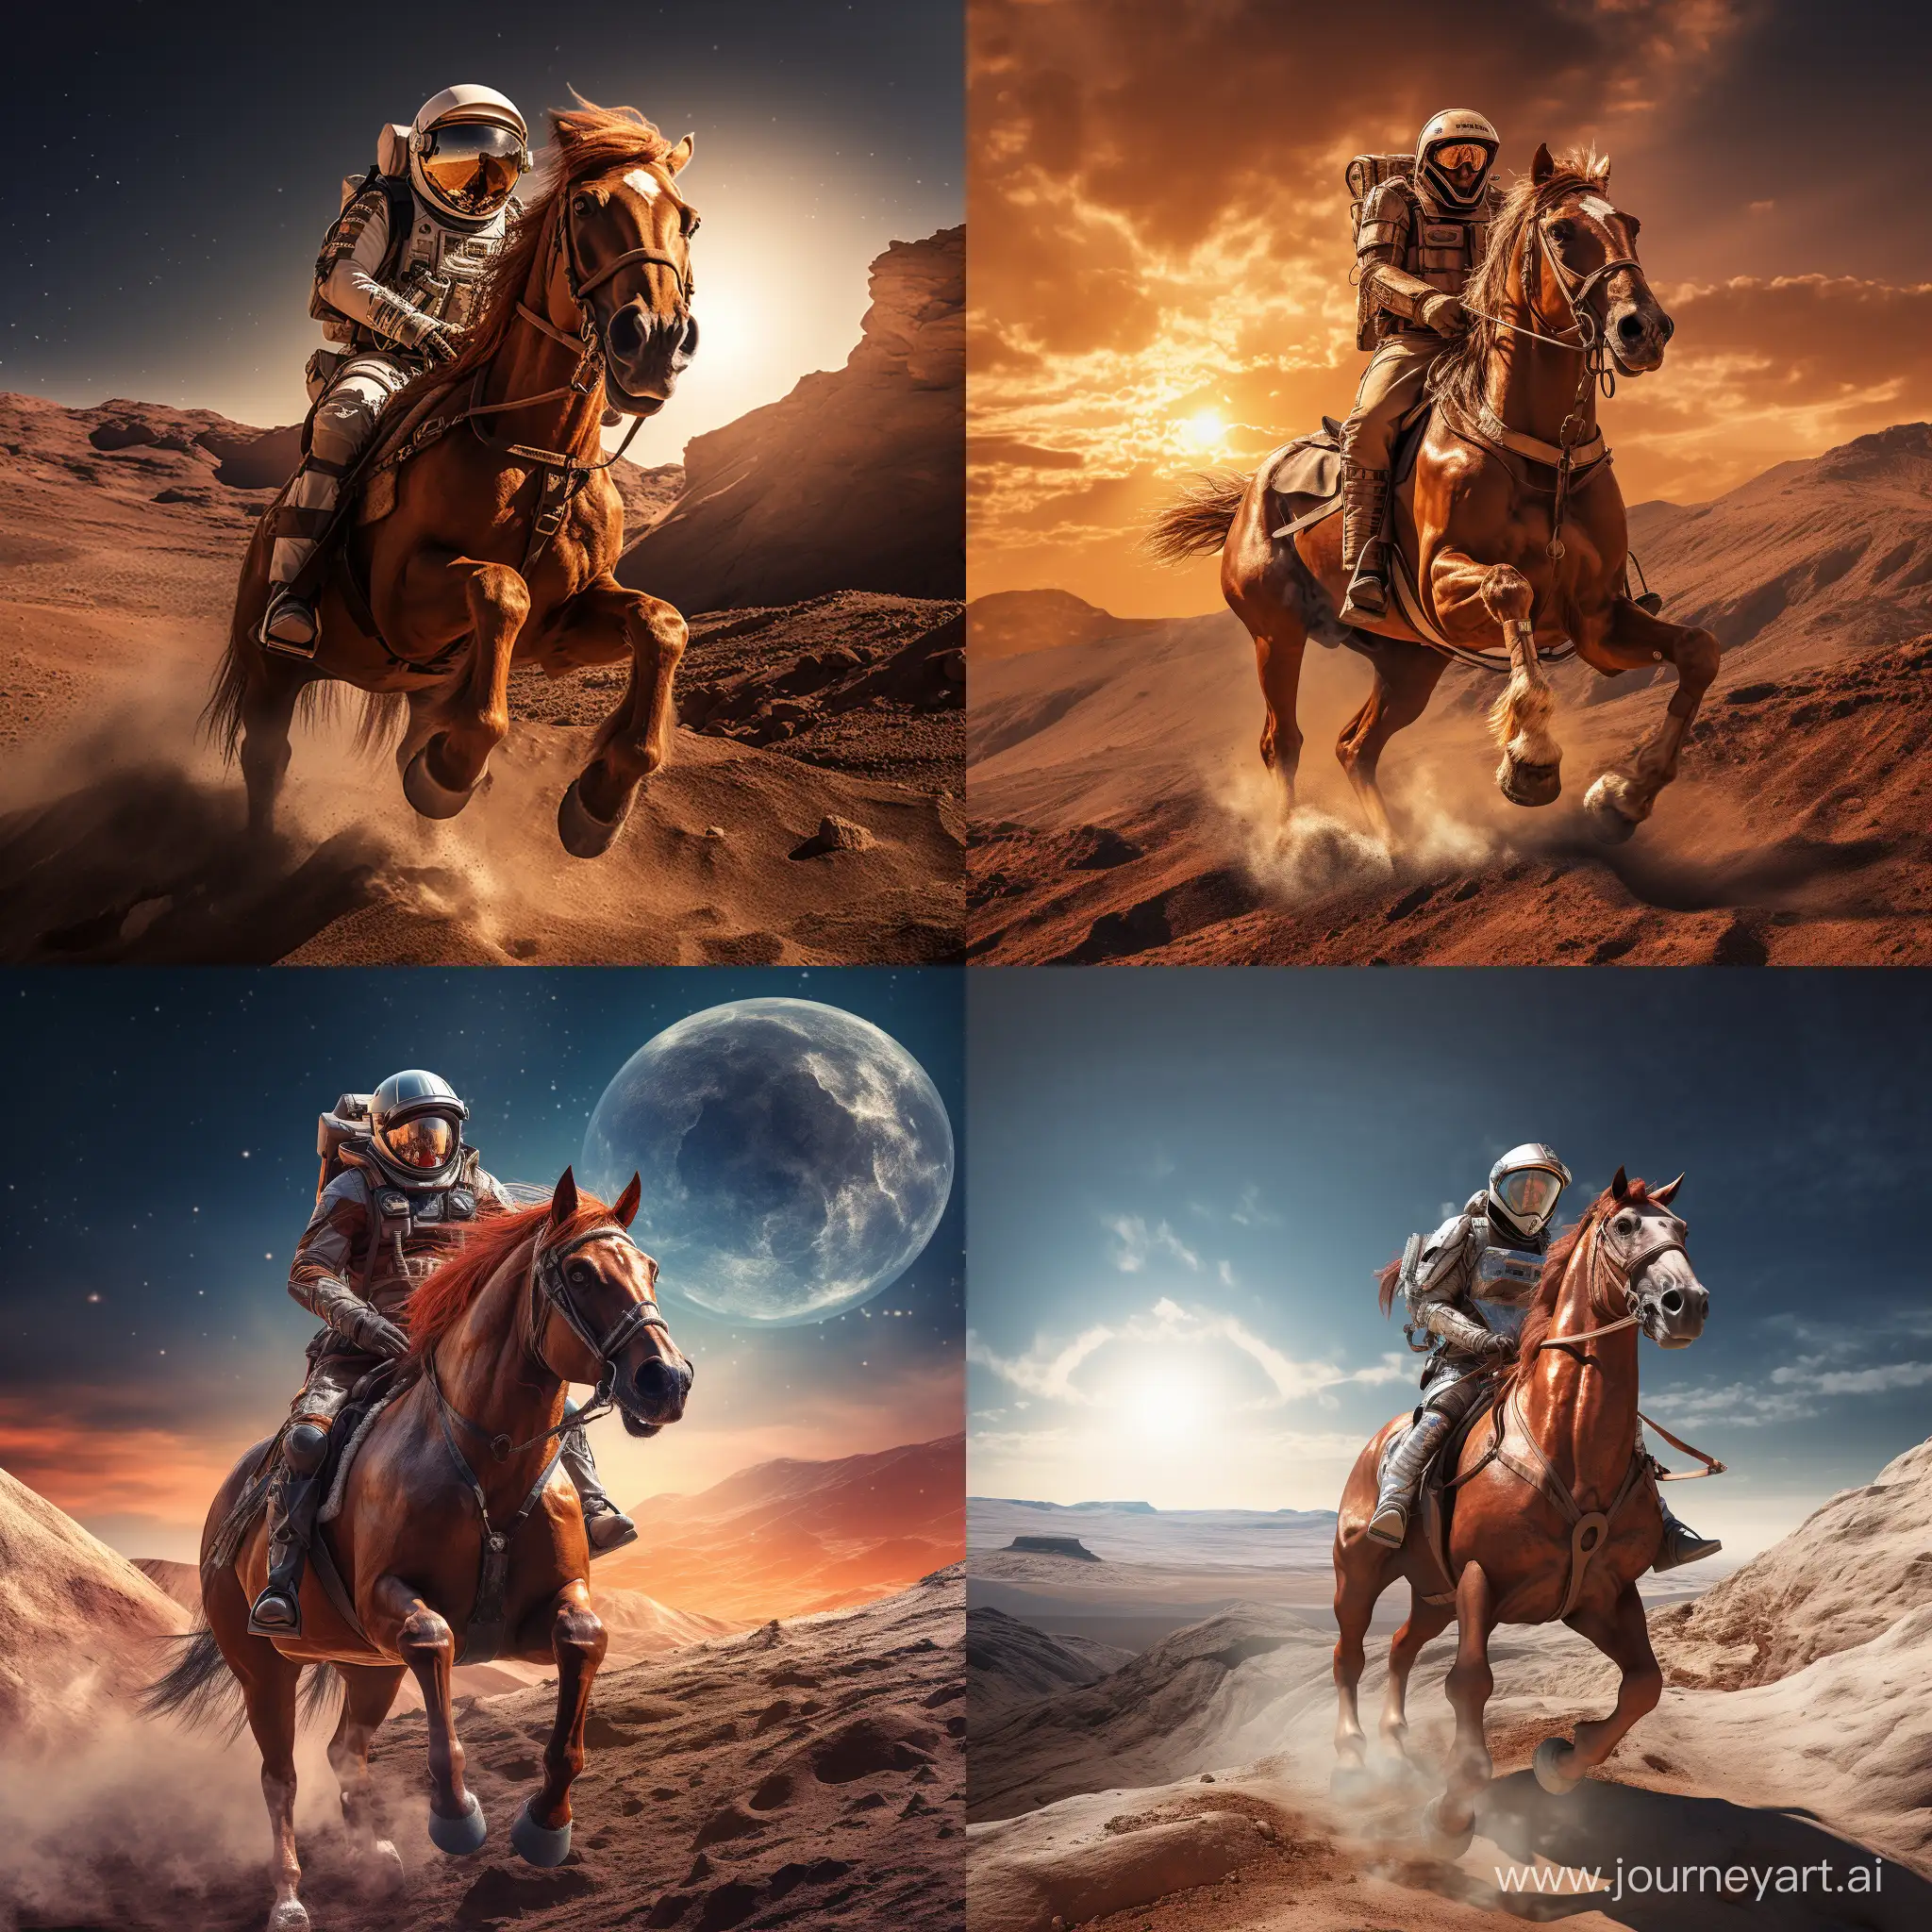 Astronaut-Riding-a-Horse-on-Mars